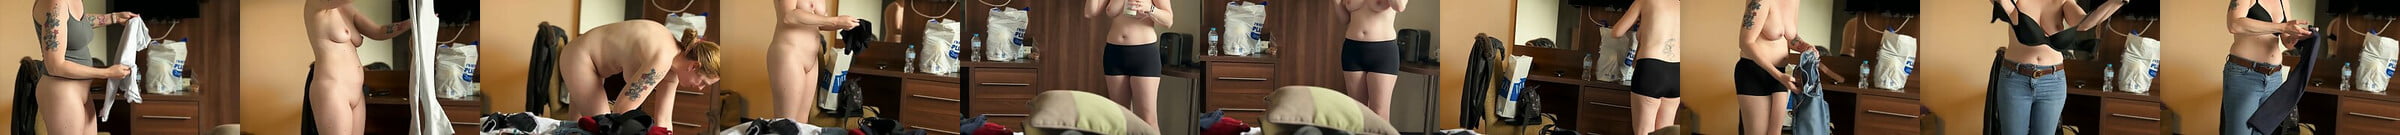 Kiwi MILF Fucked By A Workman In Her Bathroom Free Porn 56 XHamster